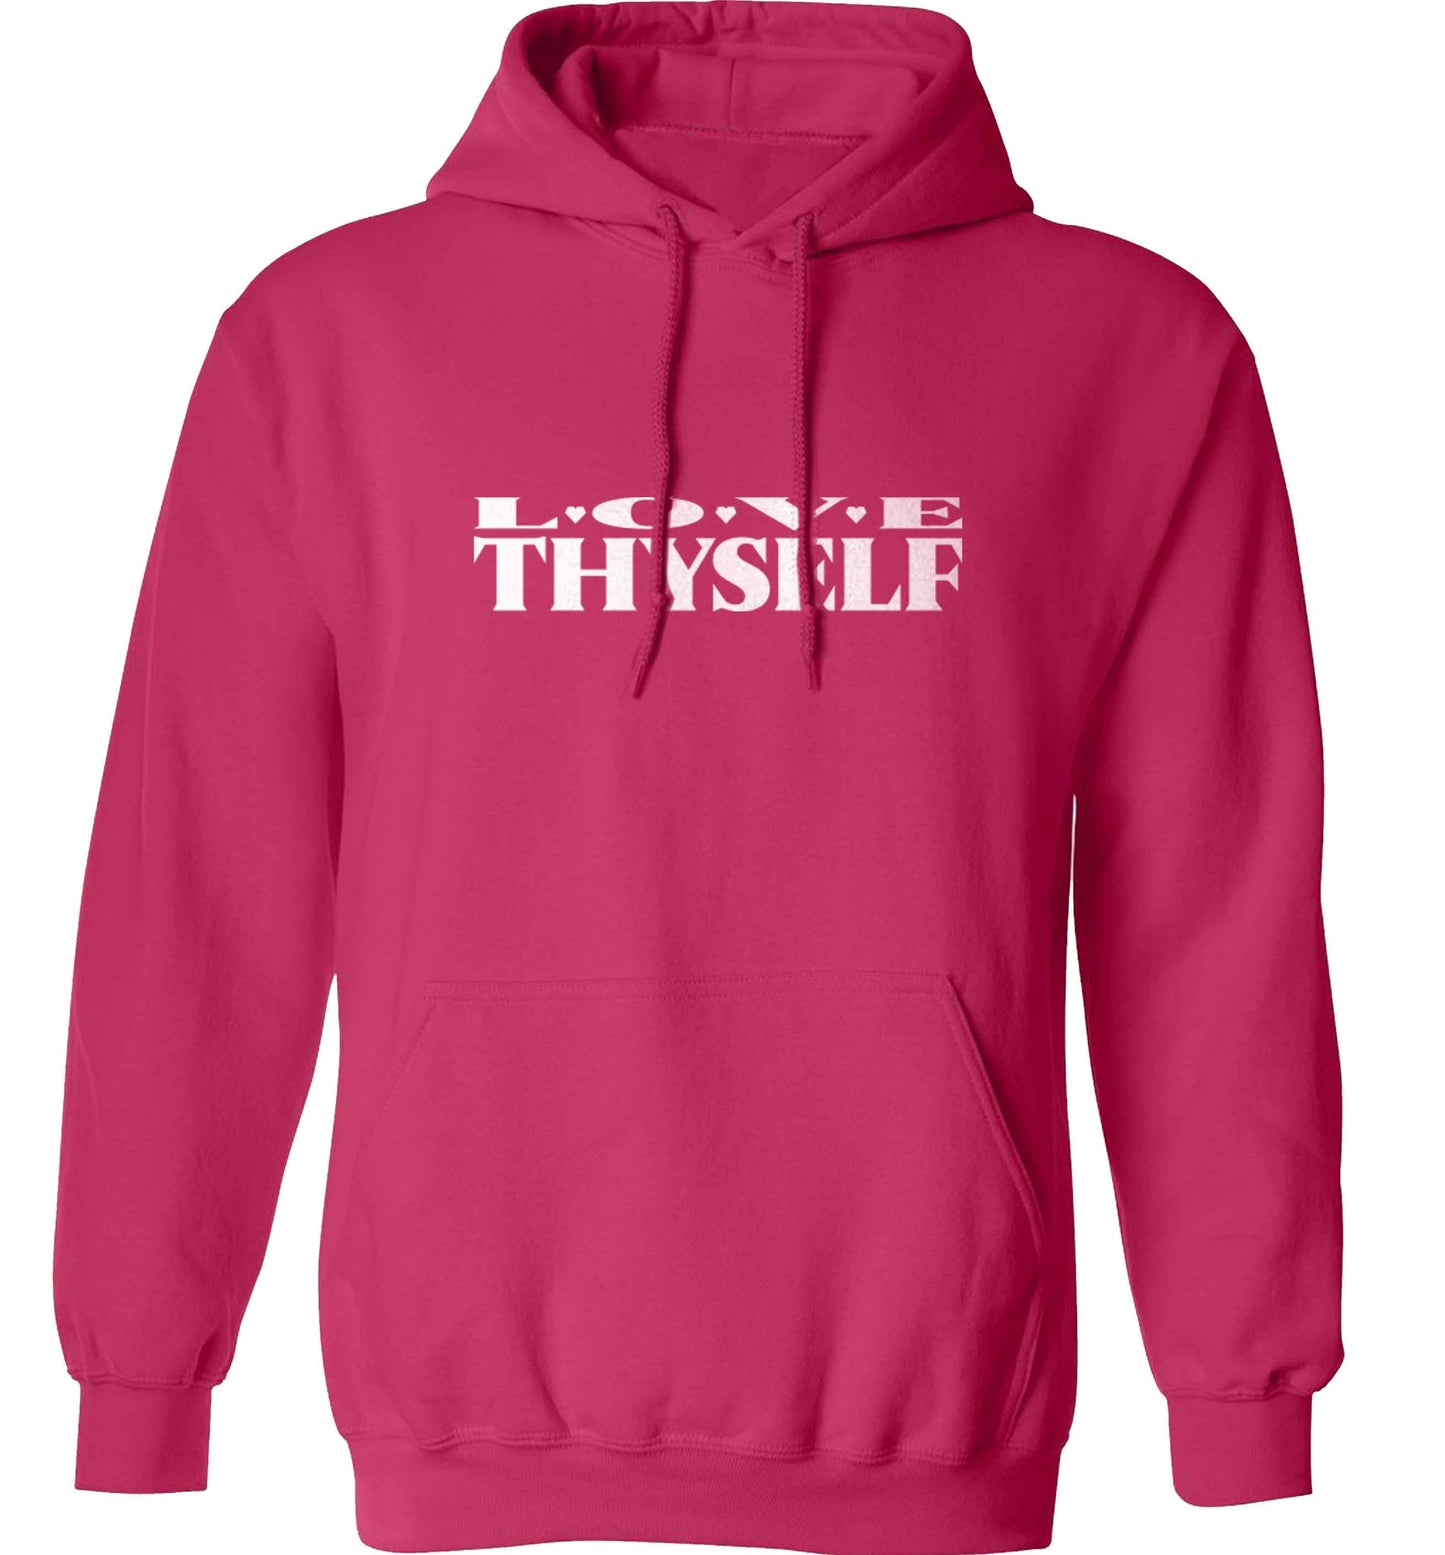 Love thyself adults unisex pink hoodie 2XL